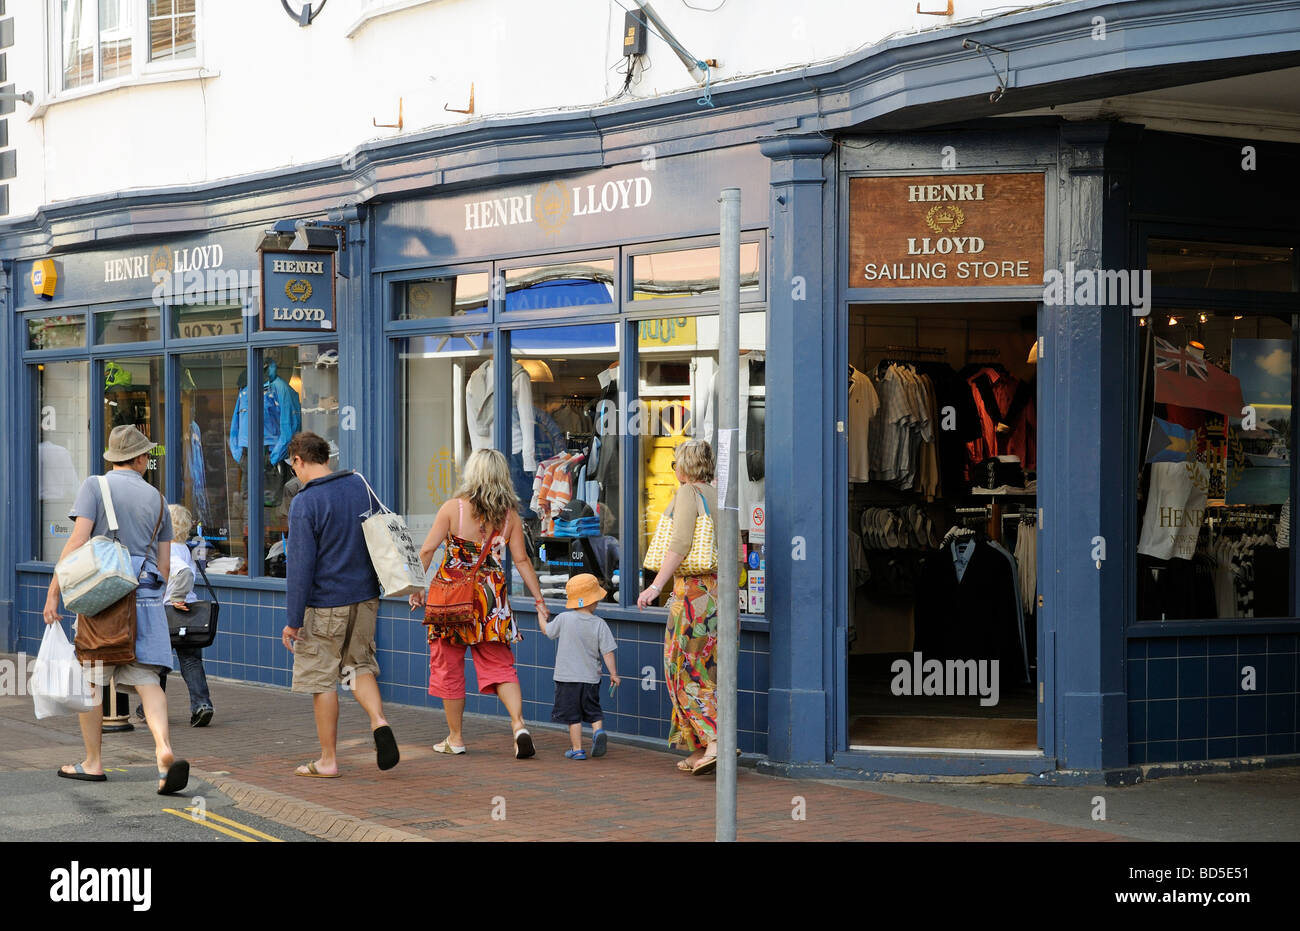 Nautical clothing shop Henri lloyd on the High Street Cowes Isle of Wight  England UK Stock Photo - Alamy